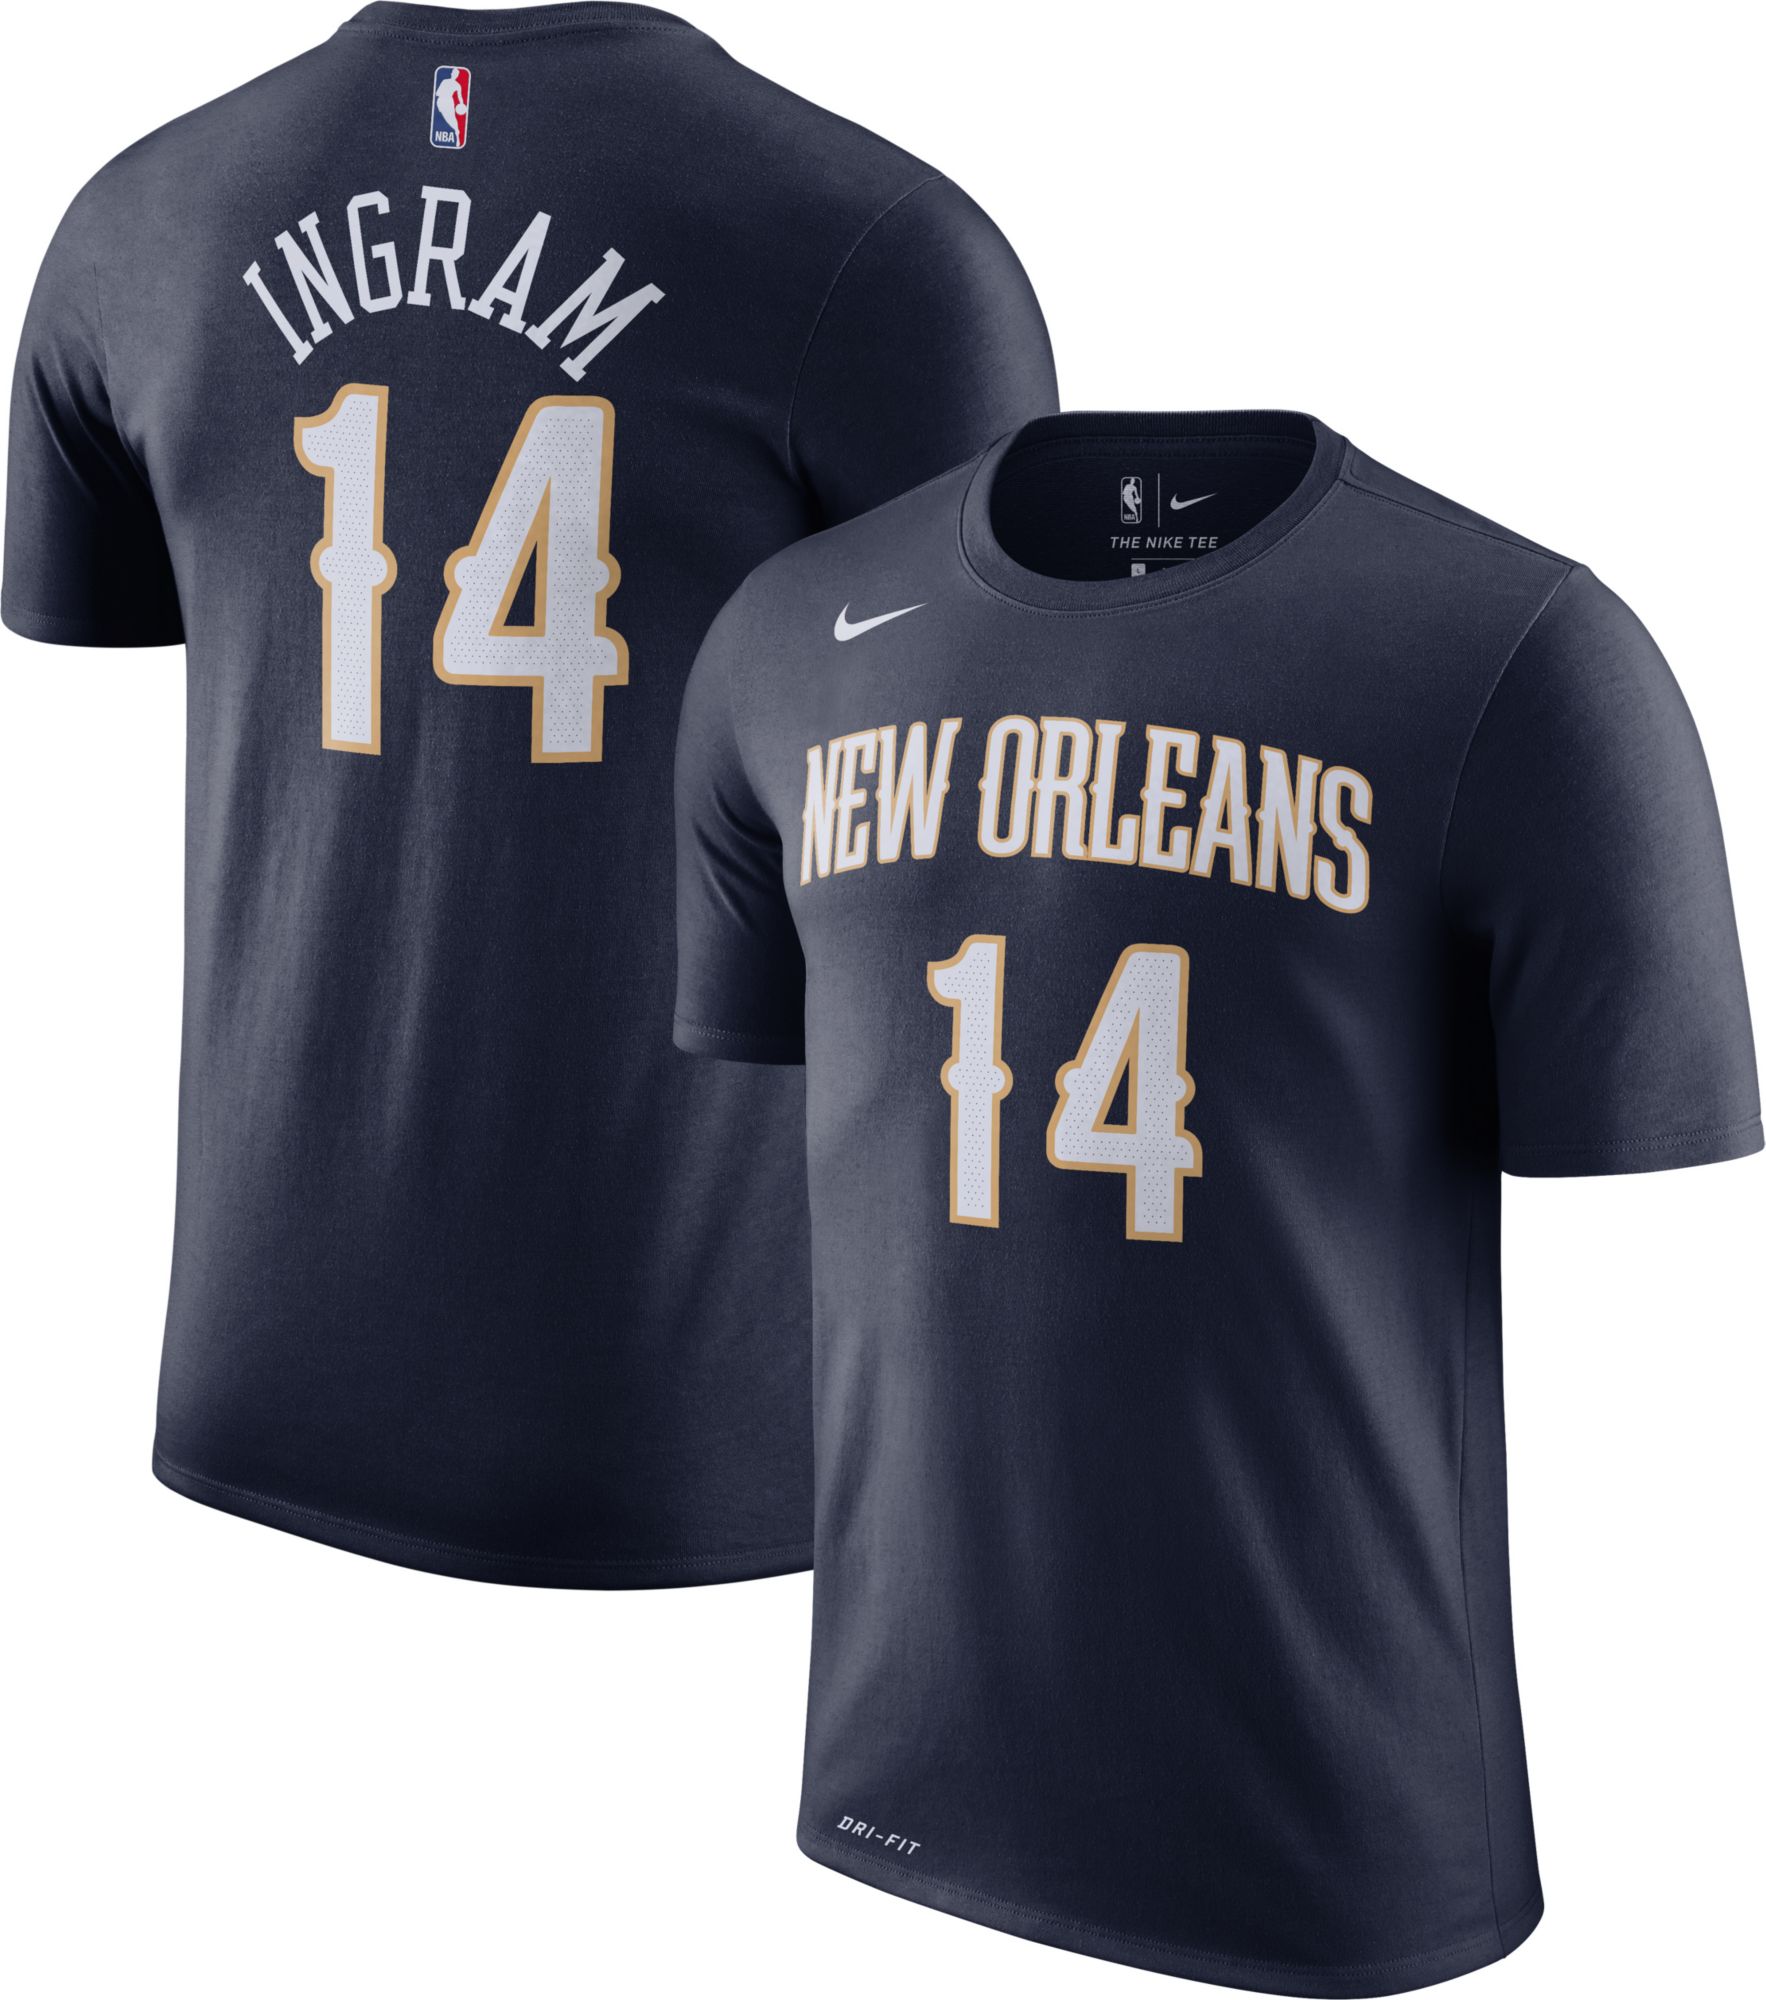 brandon ingram new orleans jersey